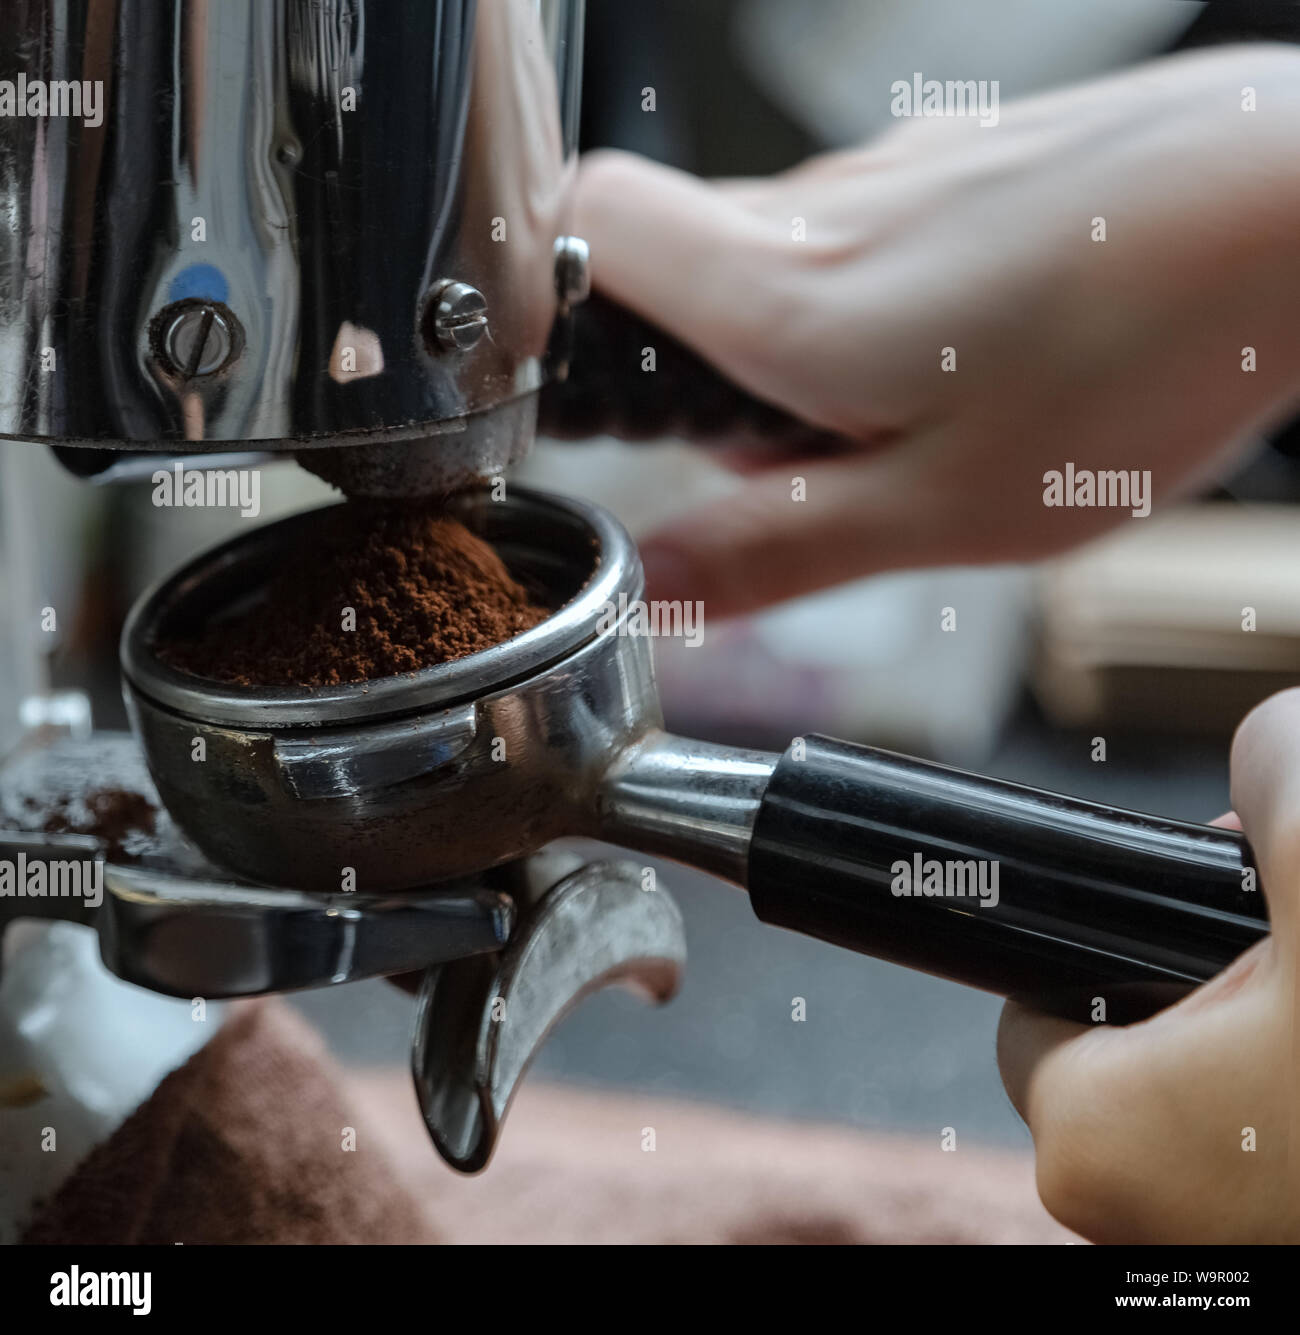 https://c8.alamy.com/comp/W9R002/manual-coffee-bean-grinder-ground-coffee-powder-with-both-hands-coffee-powder-is-in-the-handle-of-the-coffee-machine-W9R002.jpg